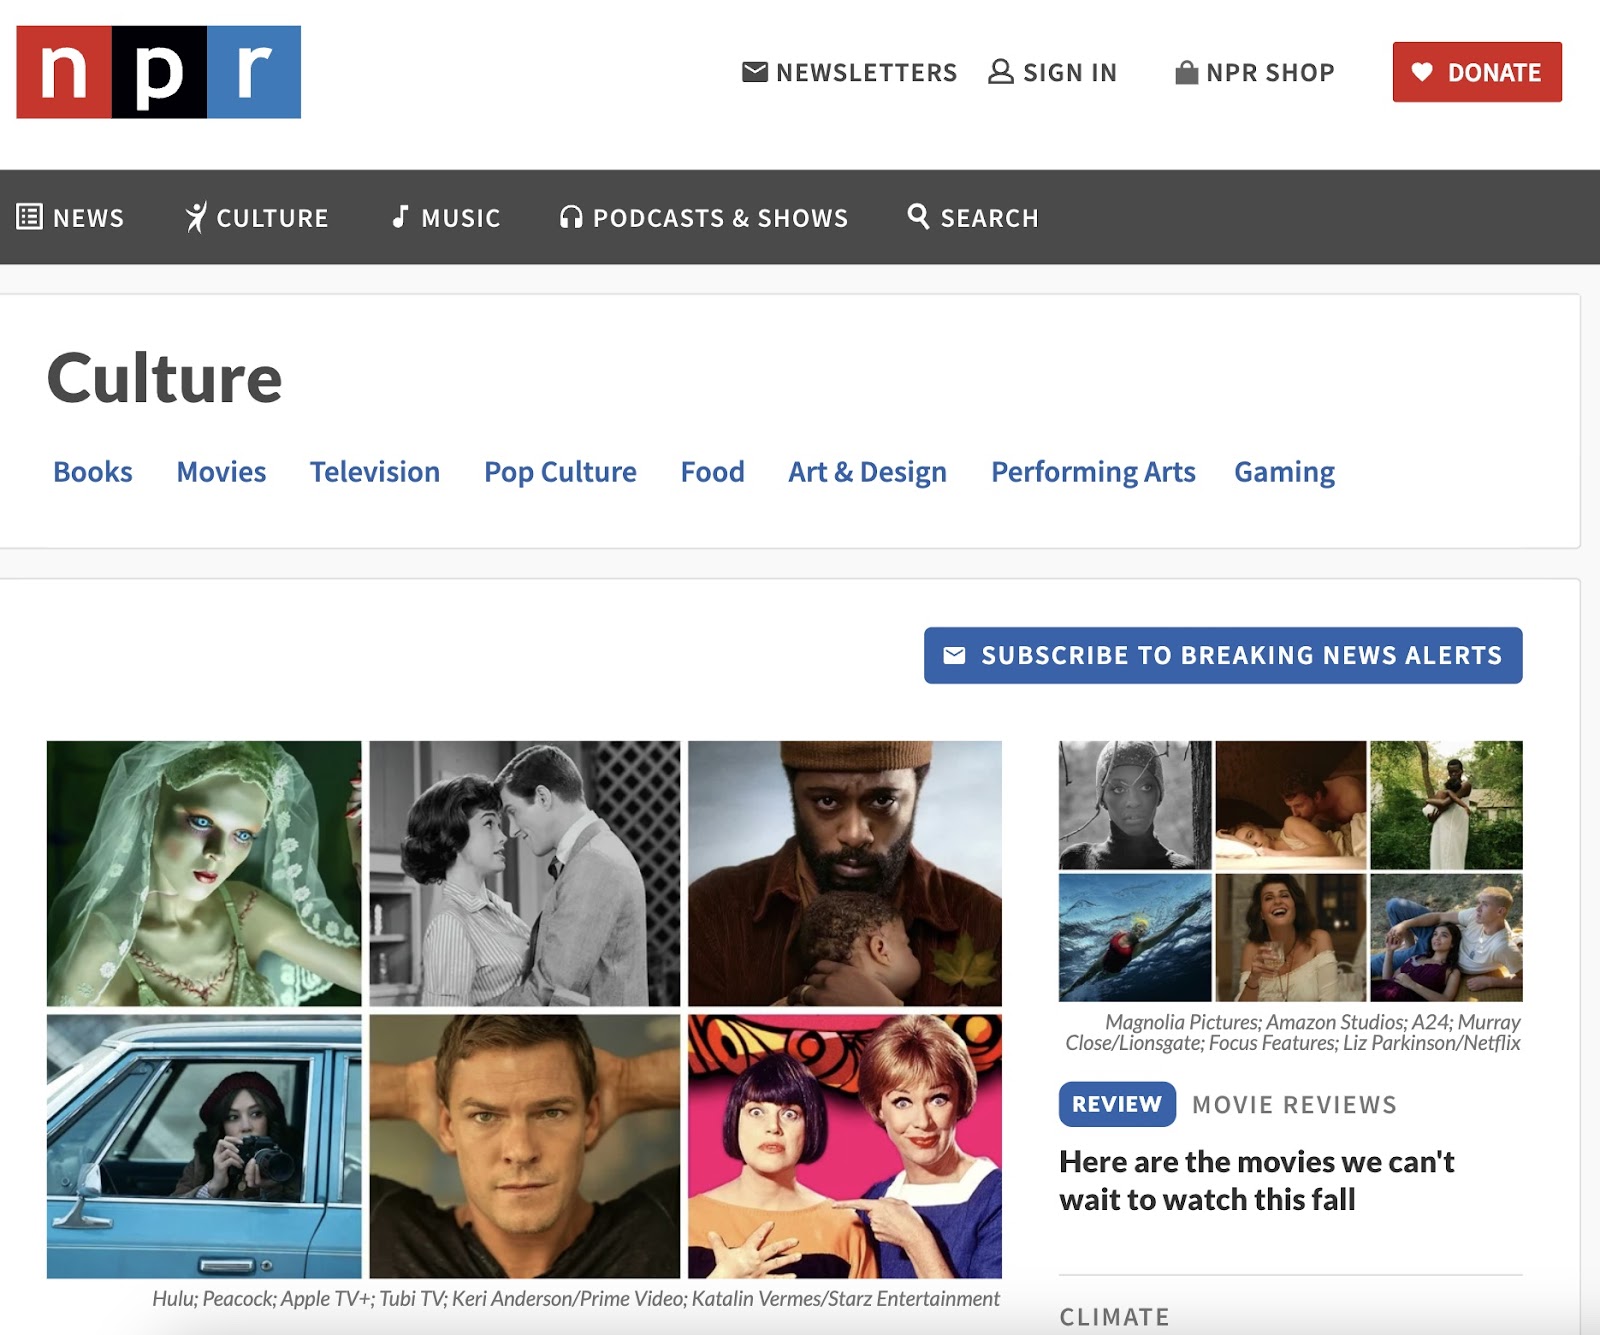 "Culture" section on NPR's website